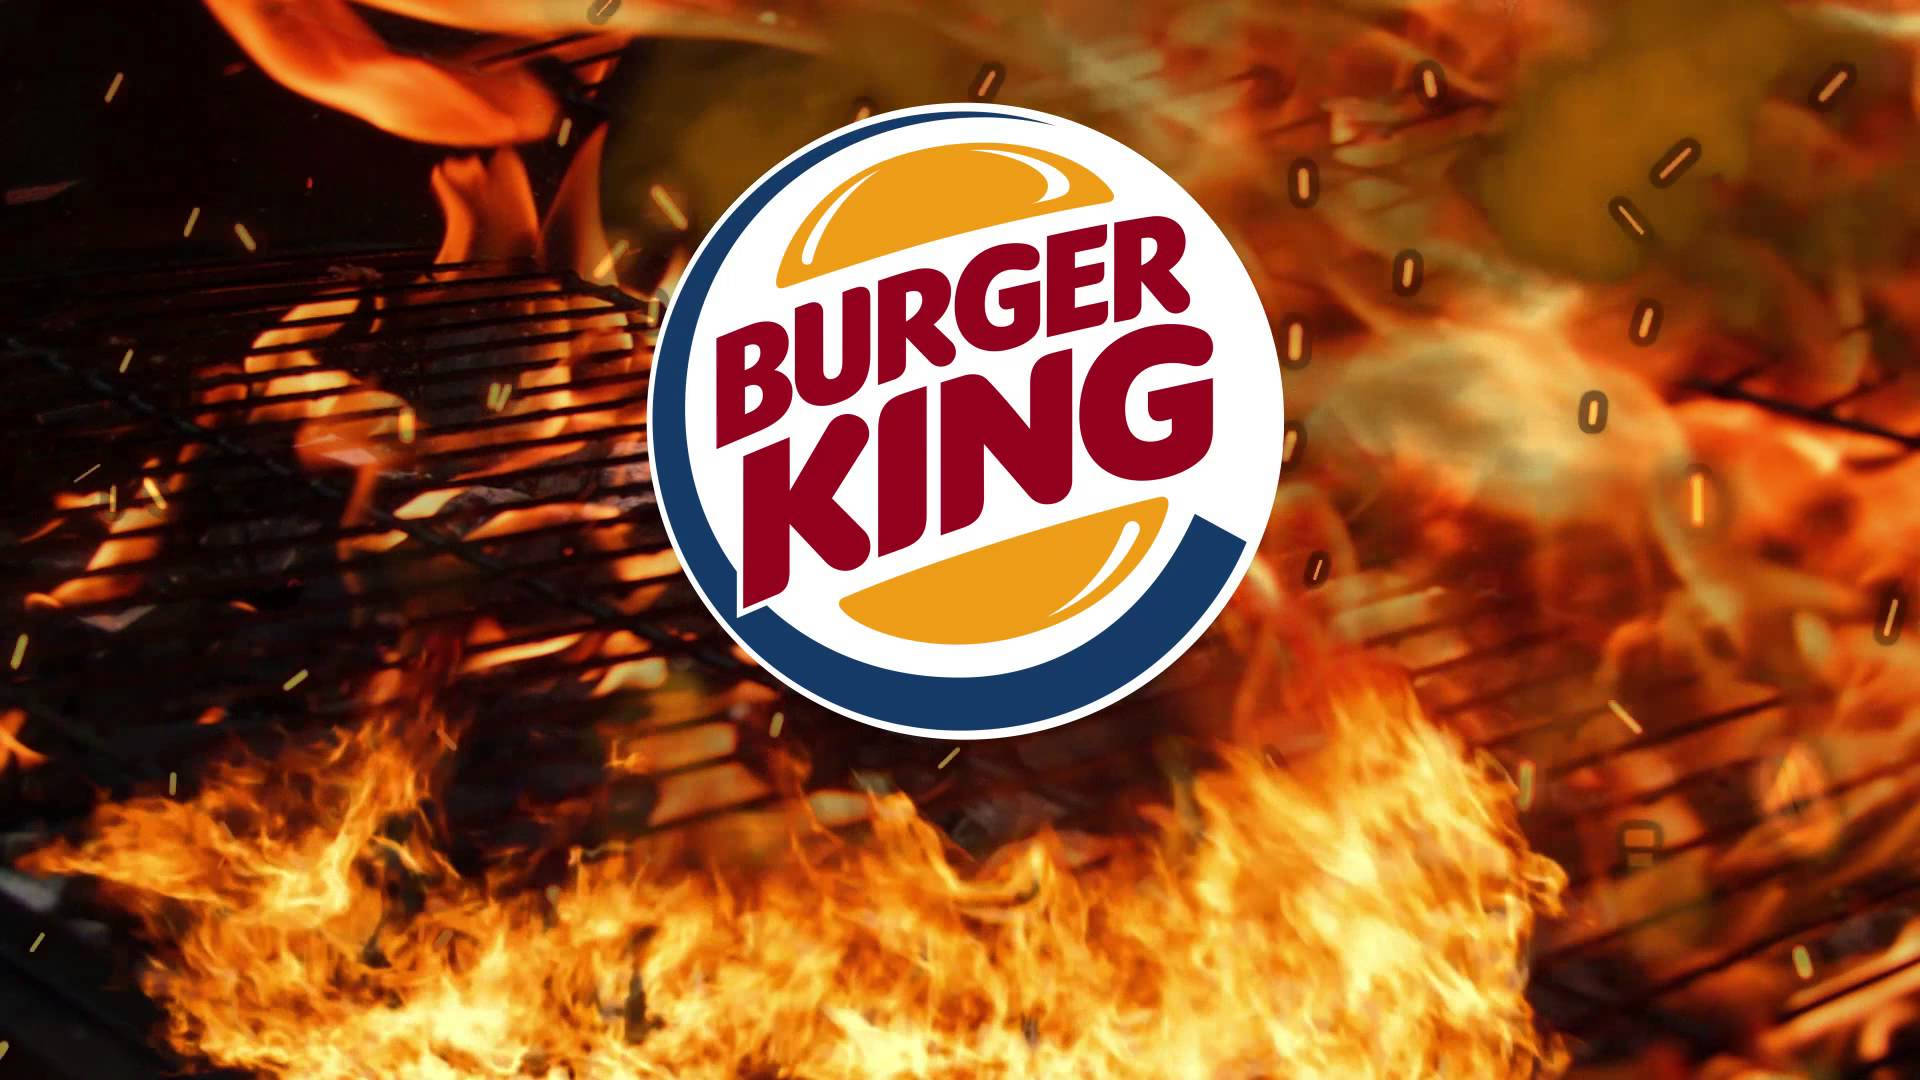 Burger King Fiery Logo Background